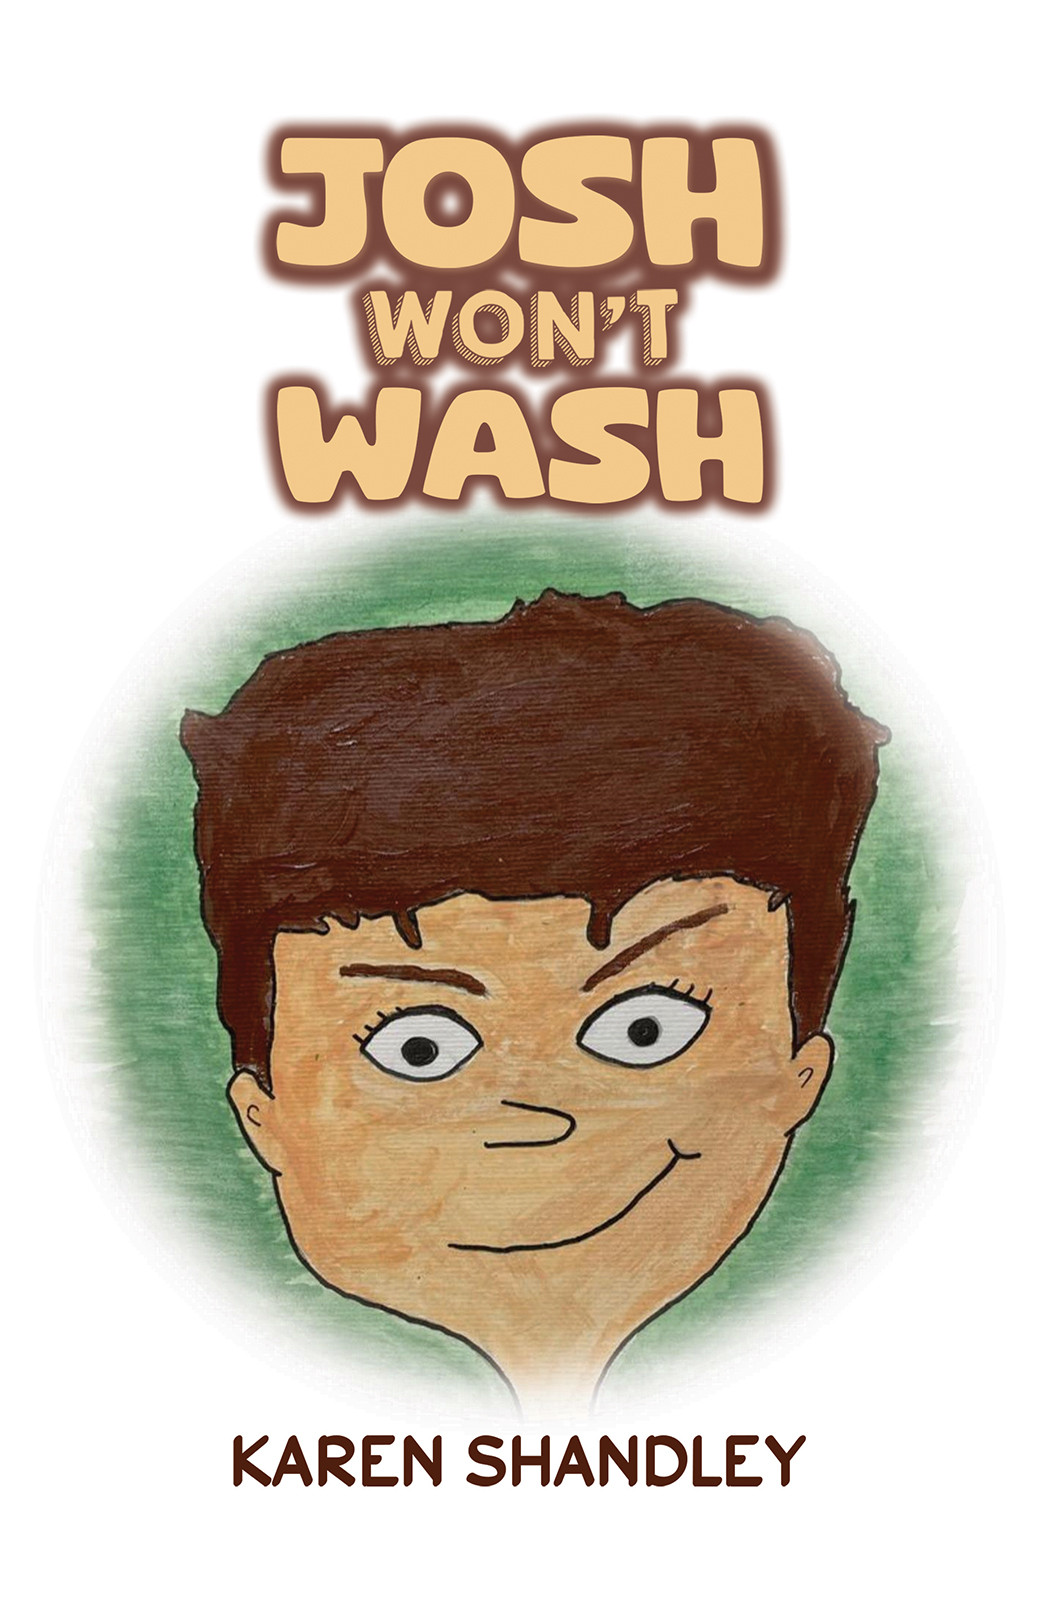 Josh Won’t Wash